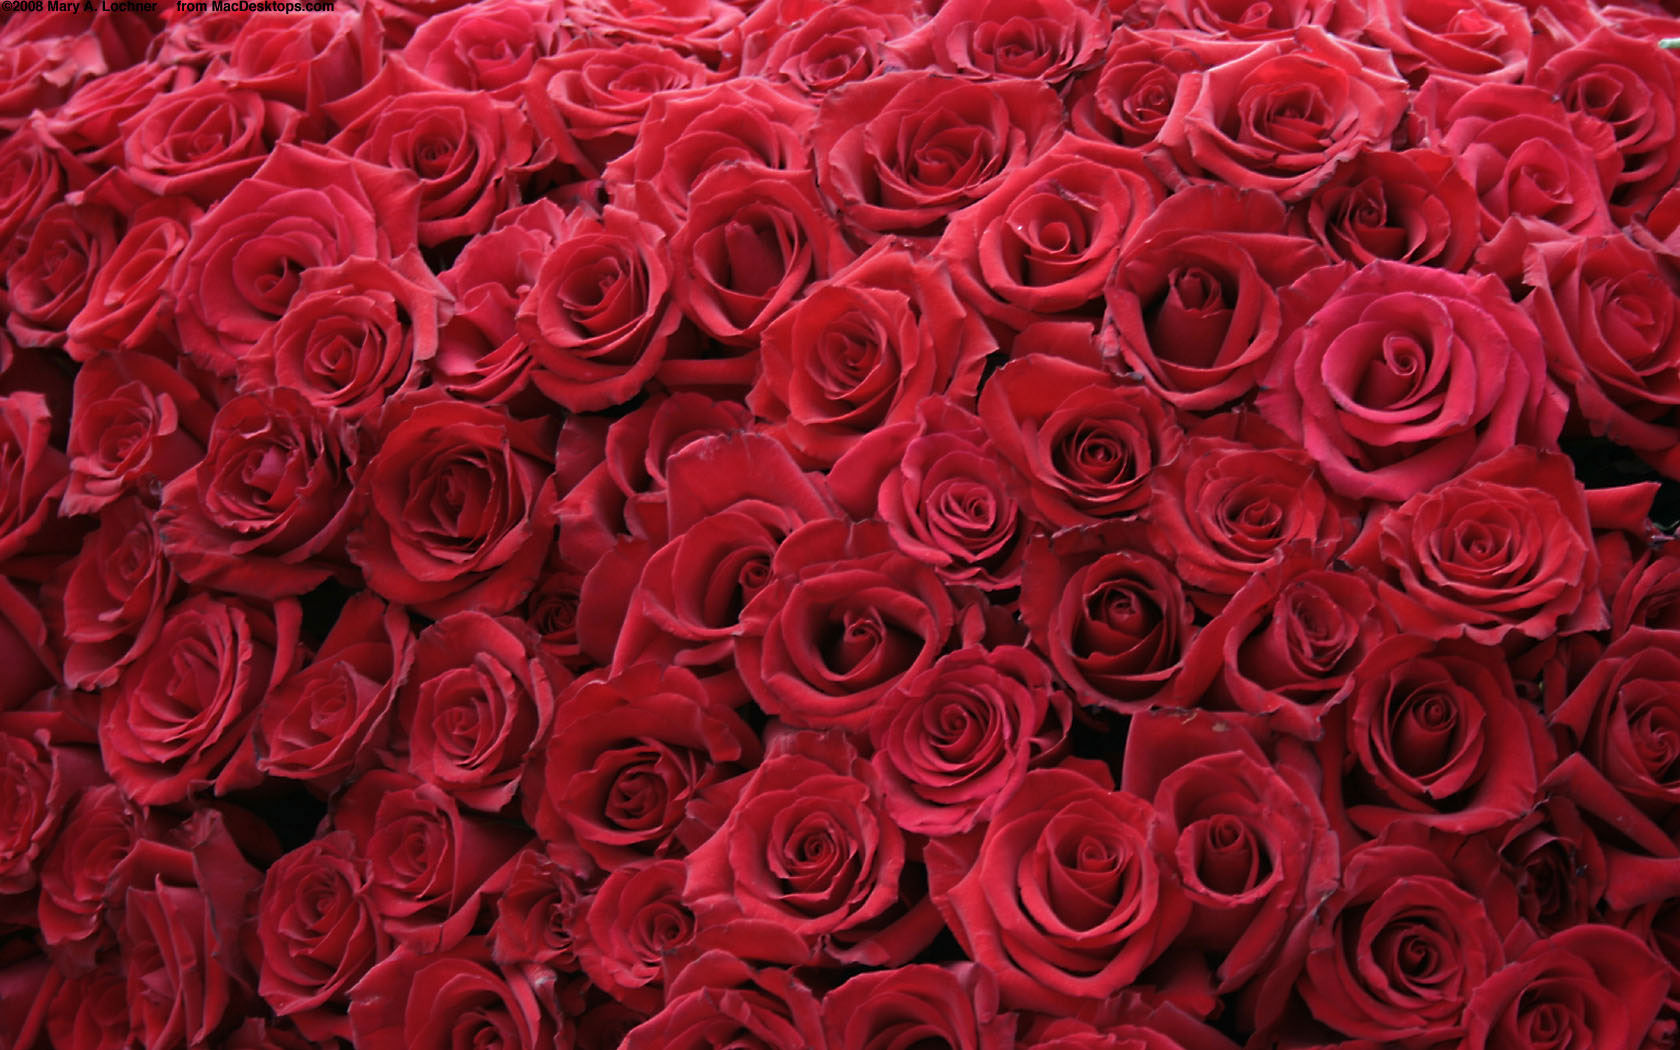  roses wallpaper hd wallpaper flowers wallpapers red roses wallpaper 1680x1050